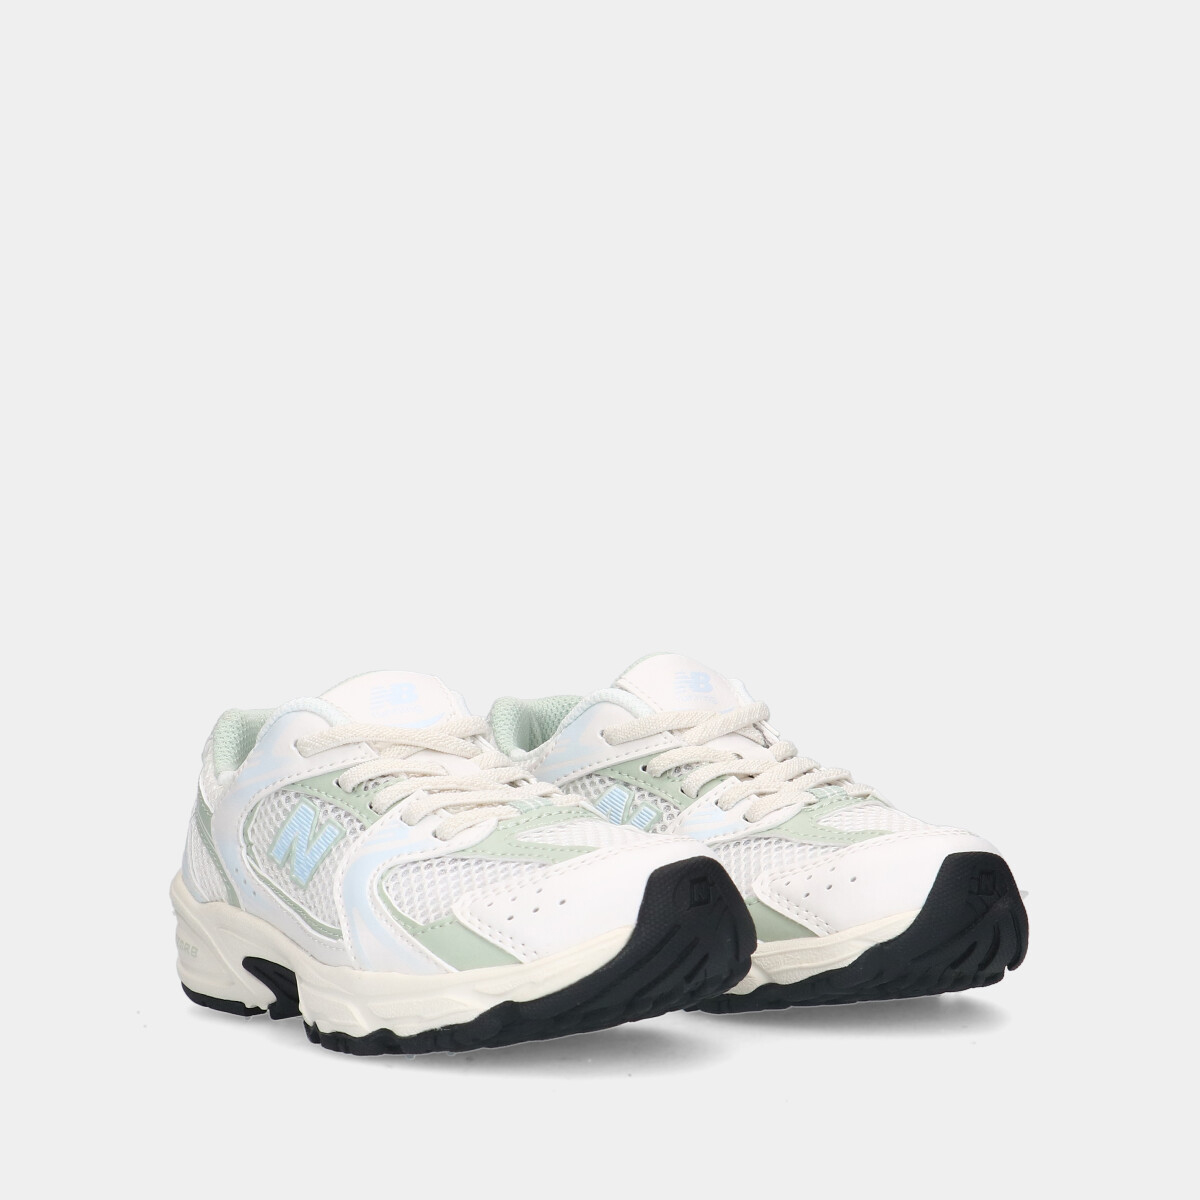 New Balance 530 Sea Salt White/Green kleuter sneakers